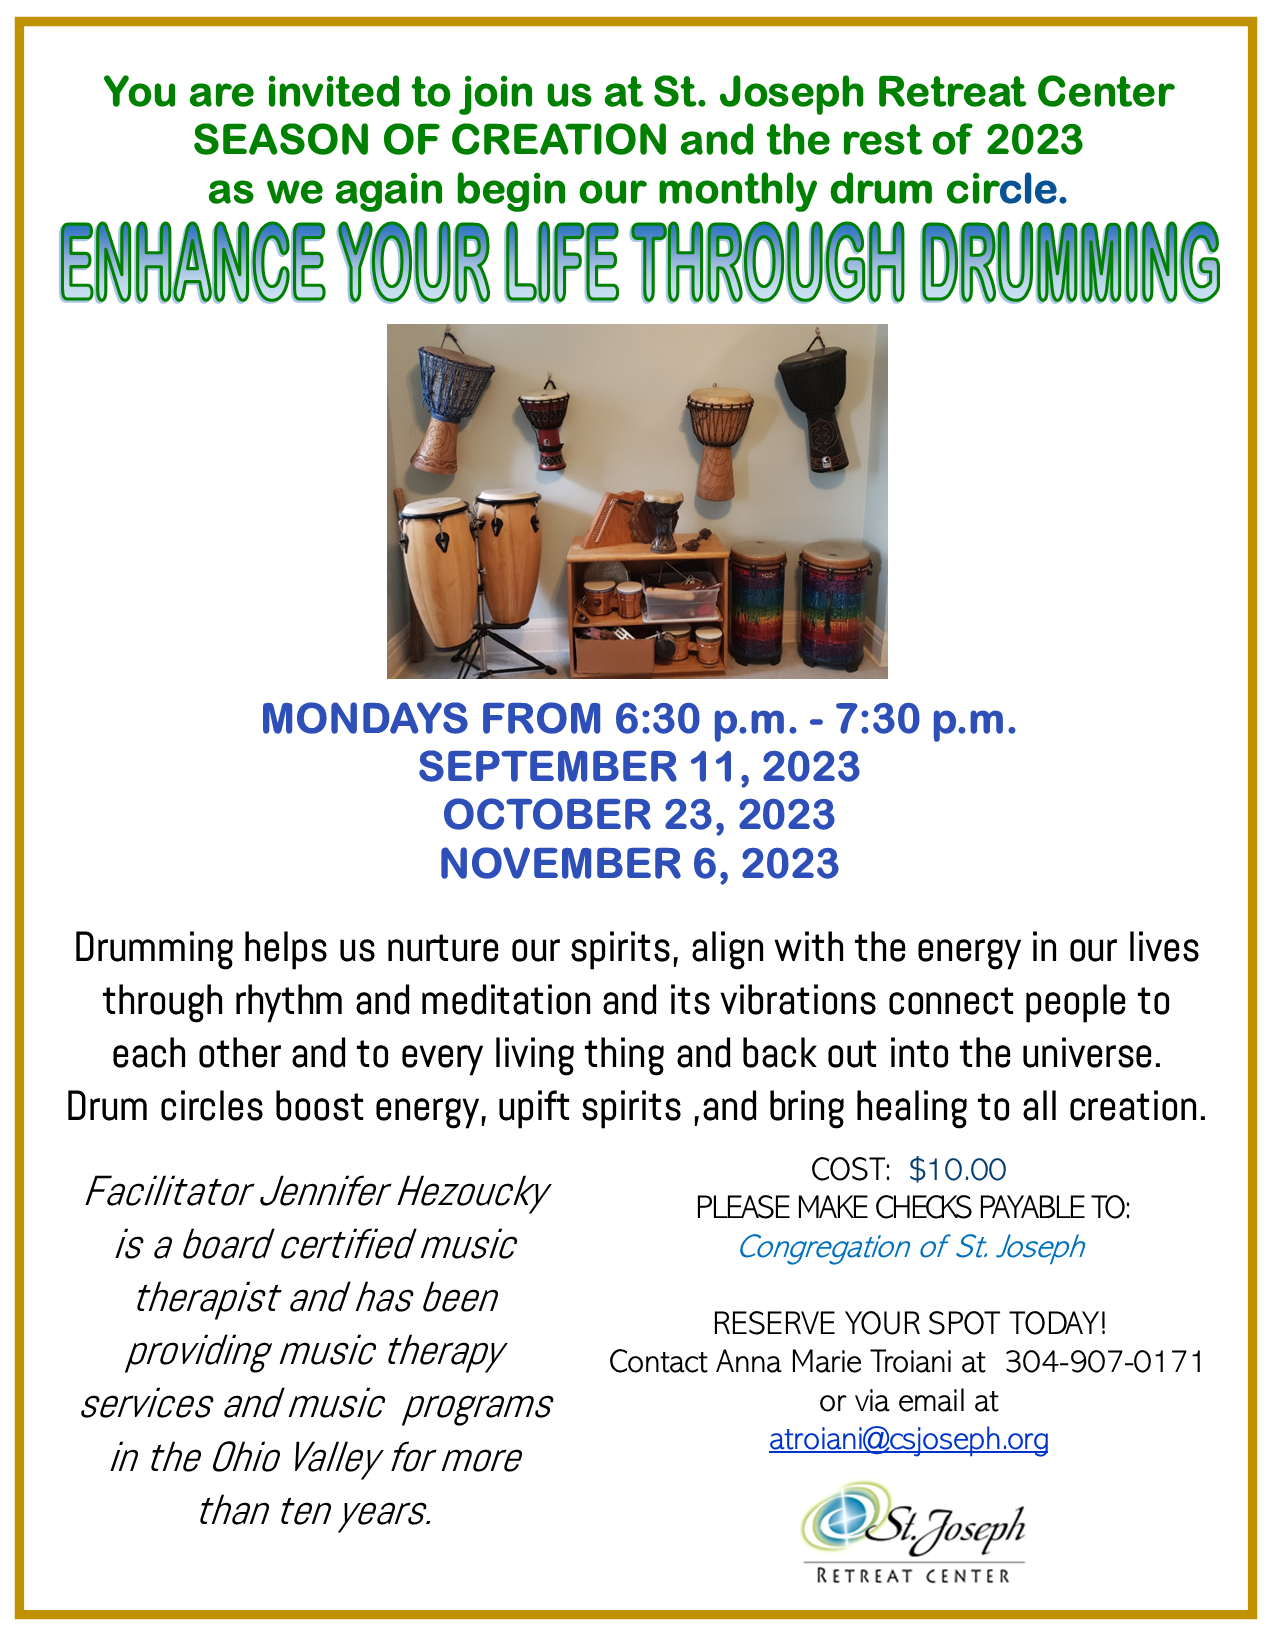 Enhance Your Life Through Drumming